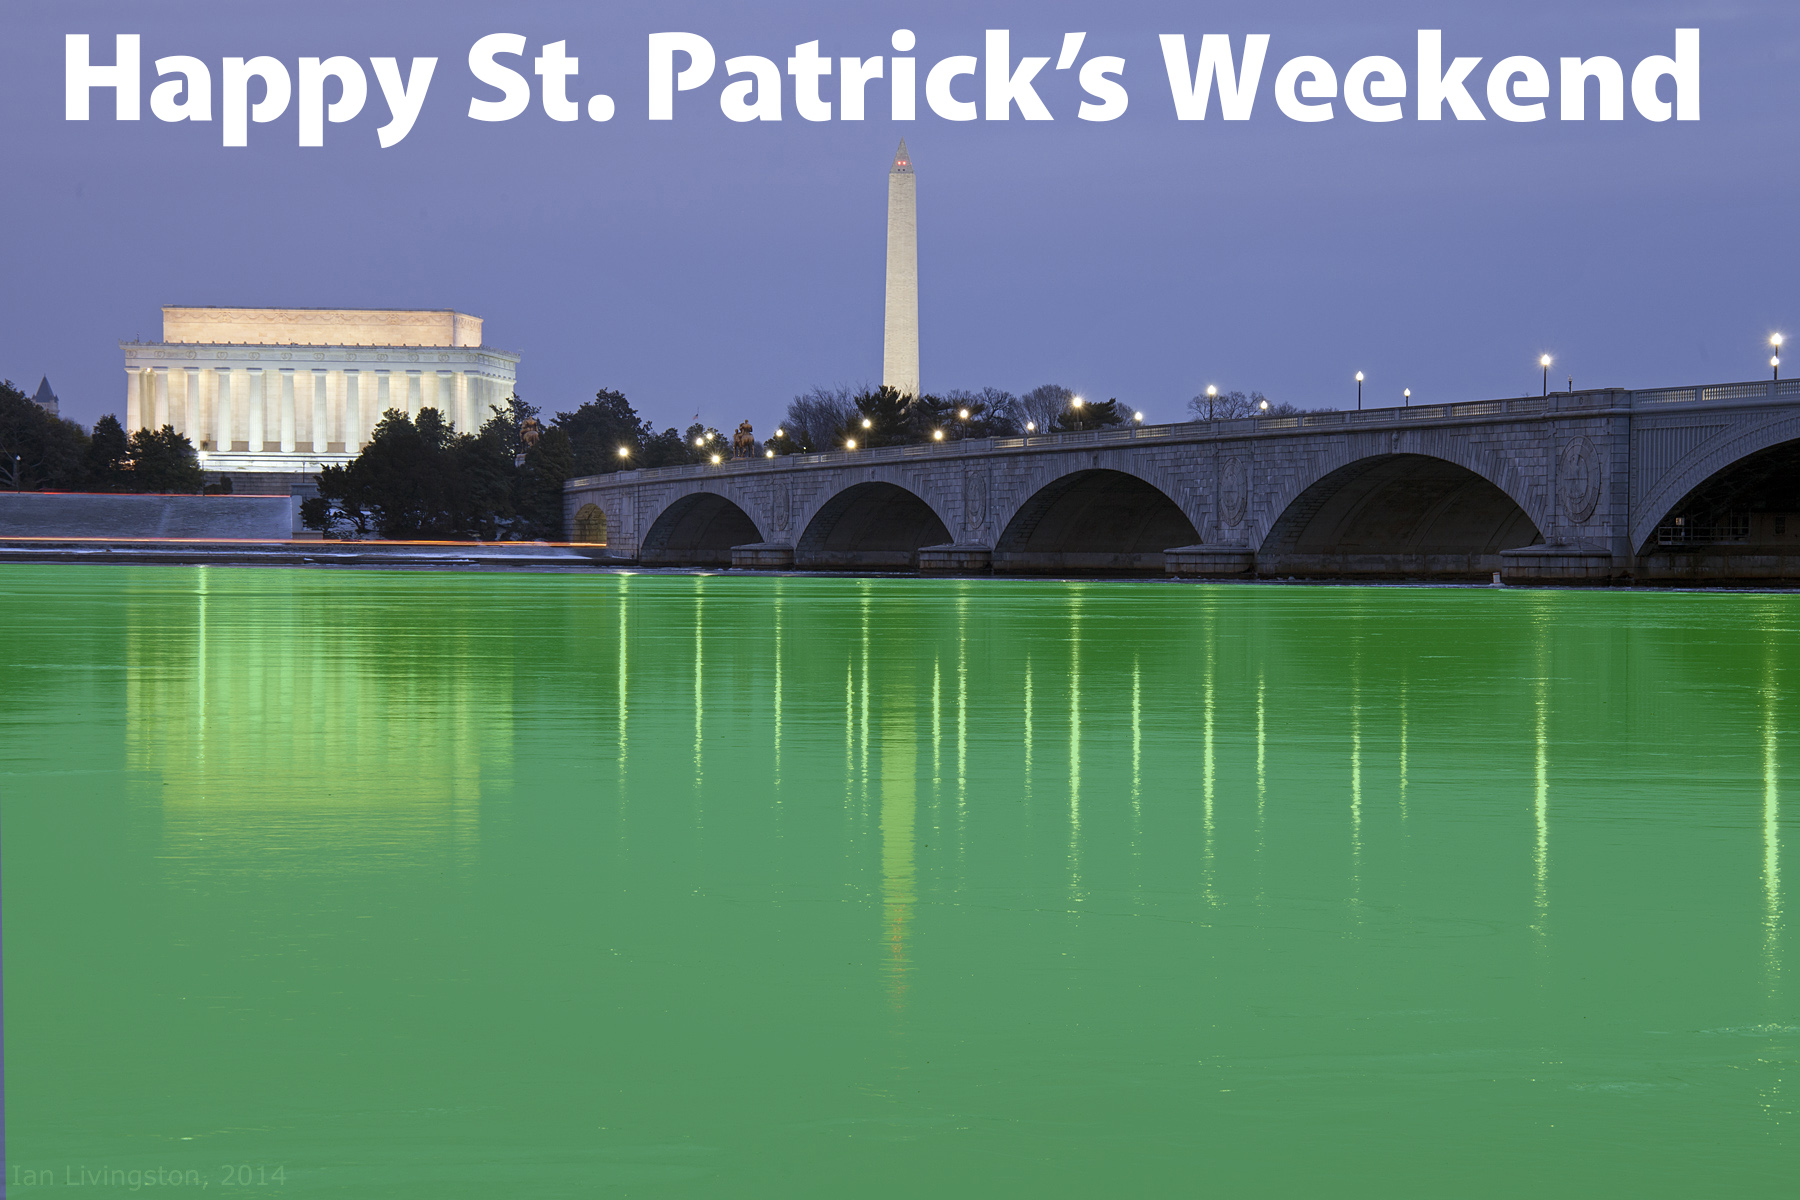 Happy St. Patrick's Weekend! The Potomac River runs green pas the Kennedy Center and Washington Monument. (Photo Ian Livingston/Washington Post. Illustration: Mark Heckathorn/DC on Heels)